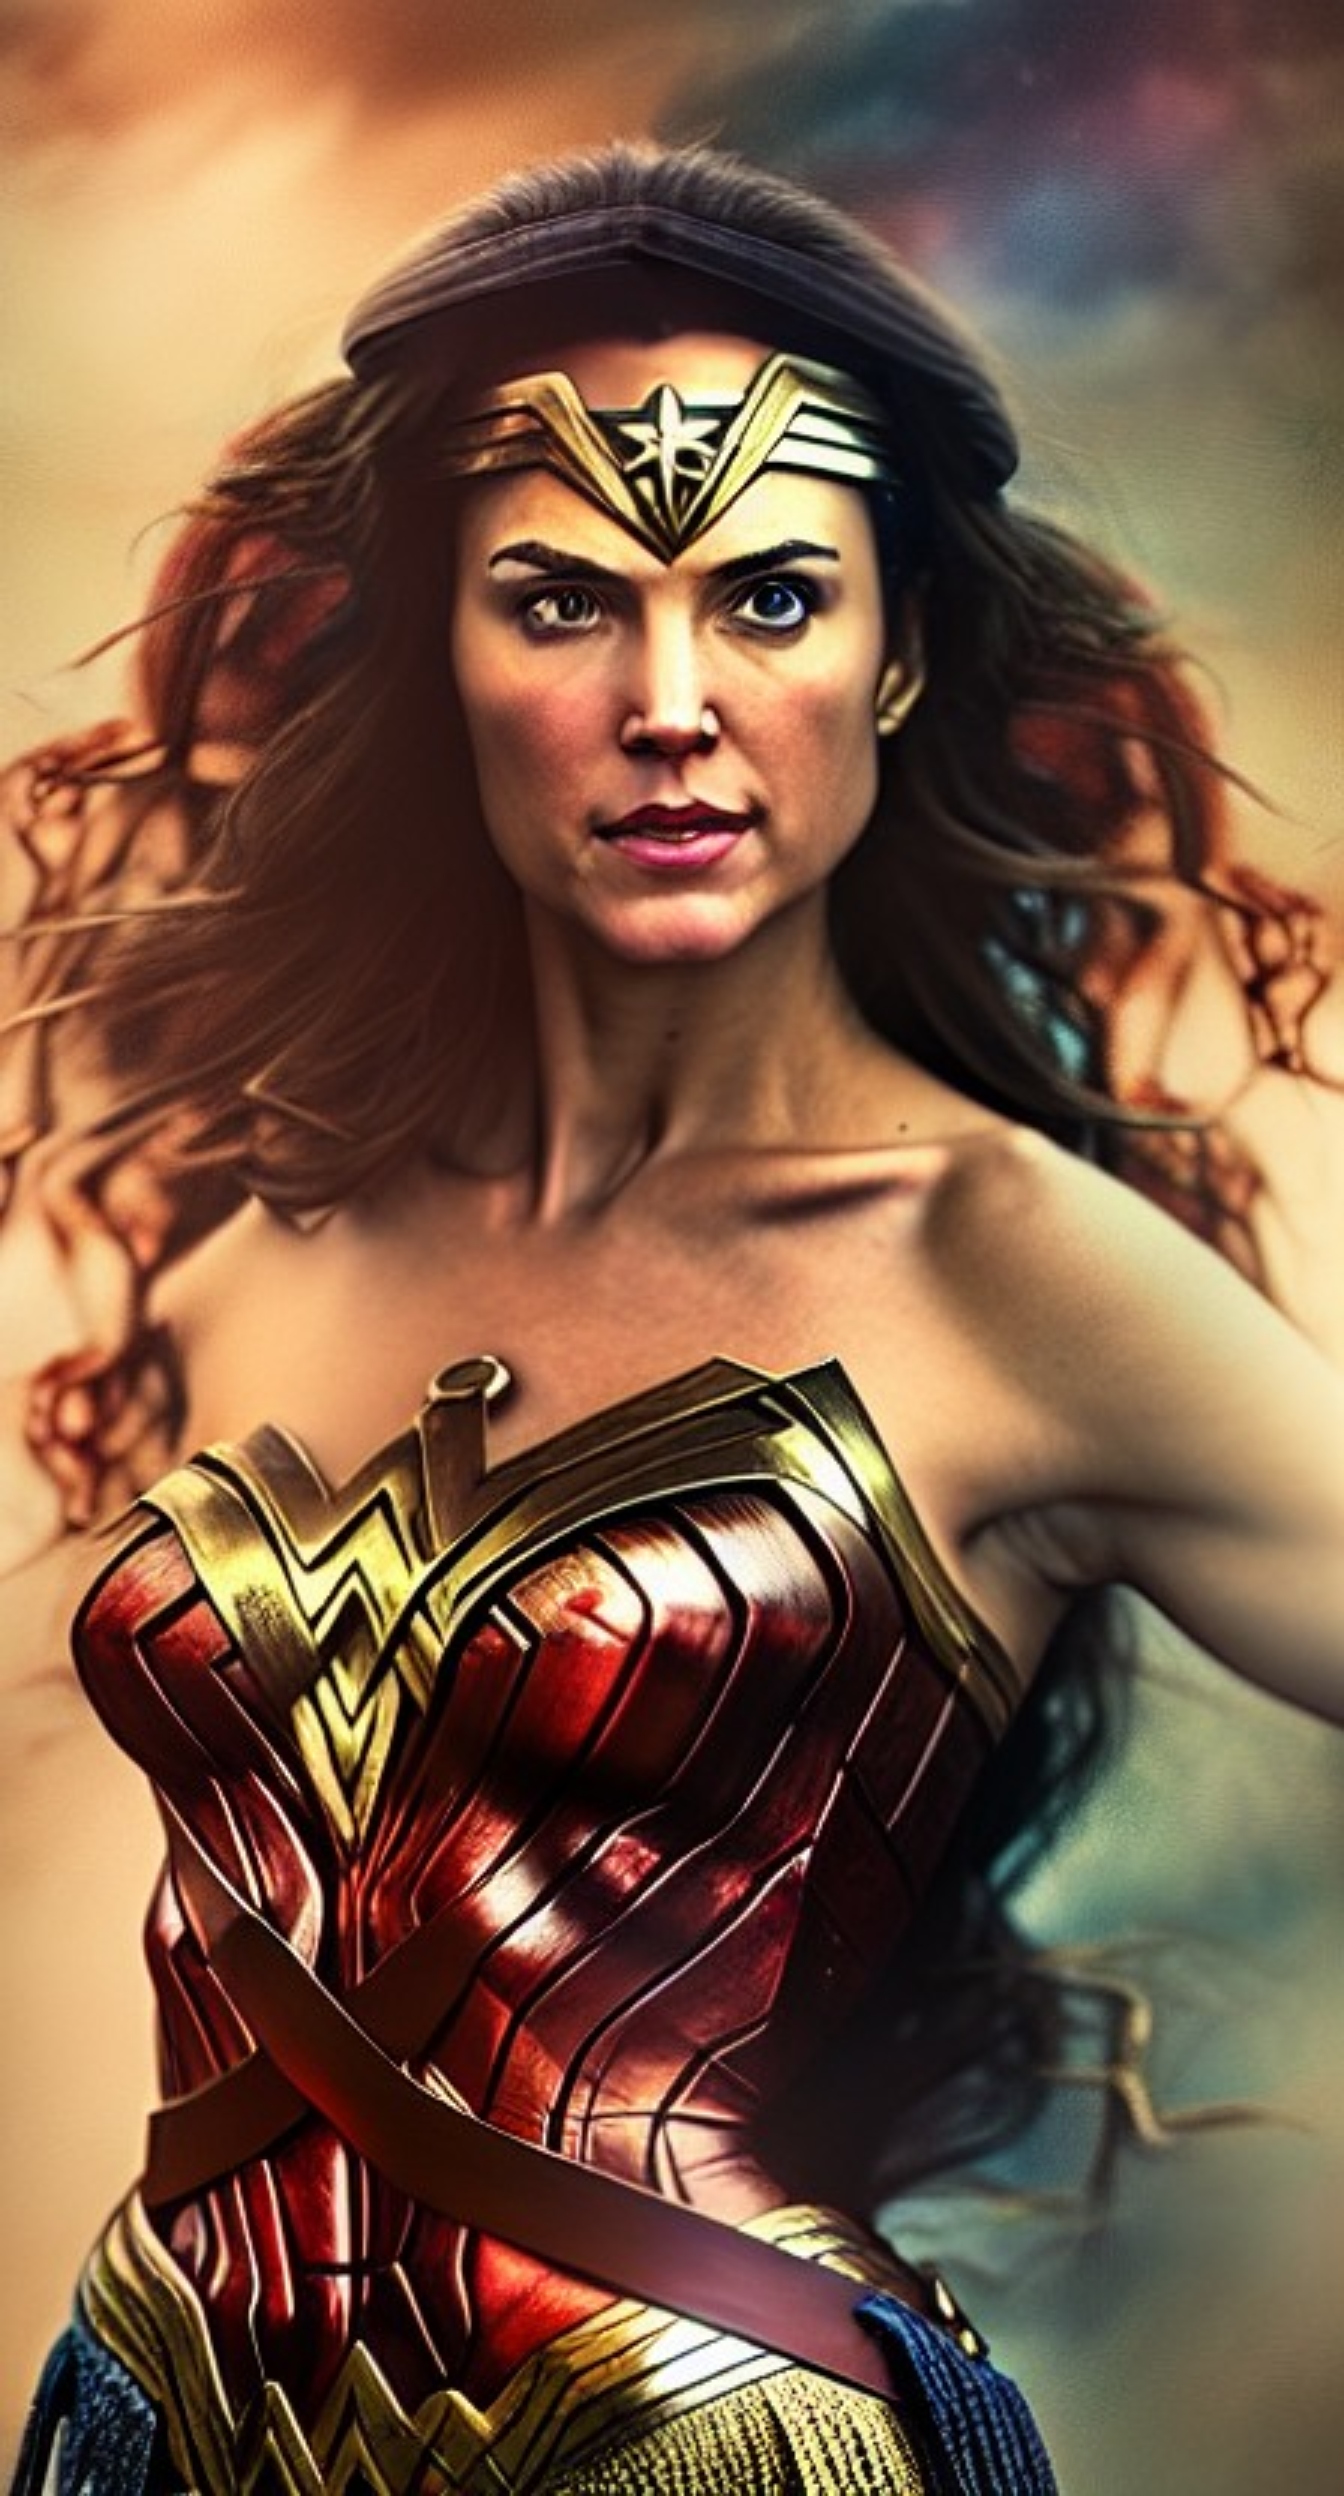 The Amazon Princess, Wonder Woman (#2) by BoomLabStudio on DeviantArt